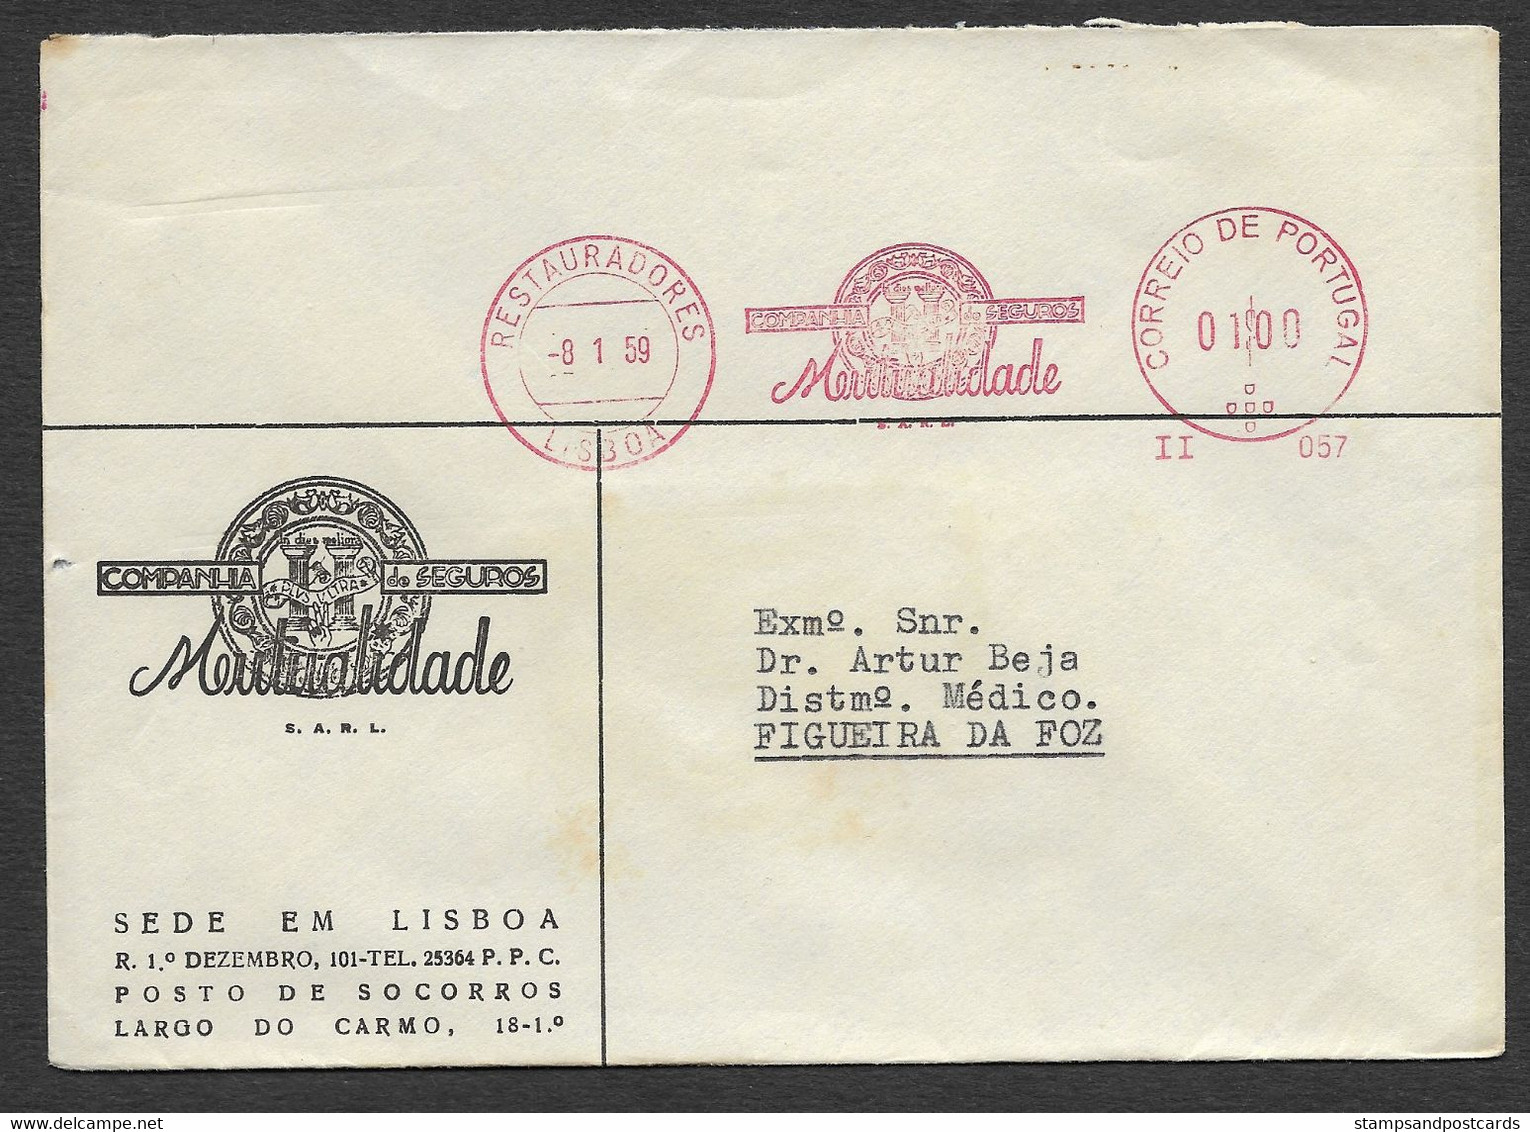 Portugal Lettre Assurance Mutualidade Vignette EMA Cachet Rouge 1959 Cover Cinderella Insurance Co. Franking Meter - Briefe U. Dokumente